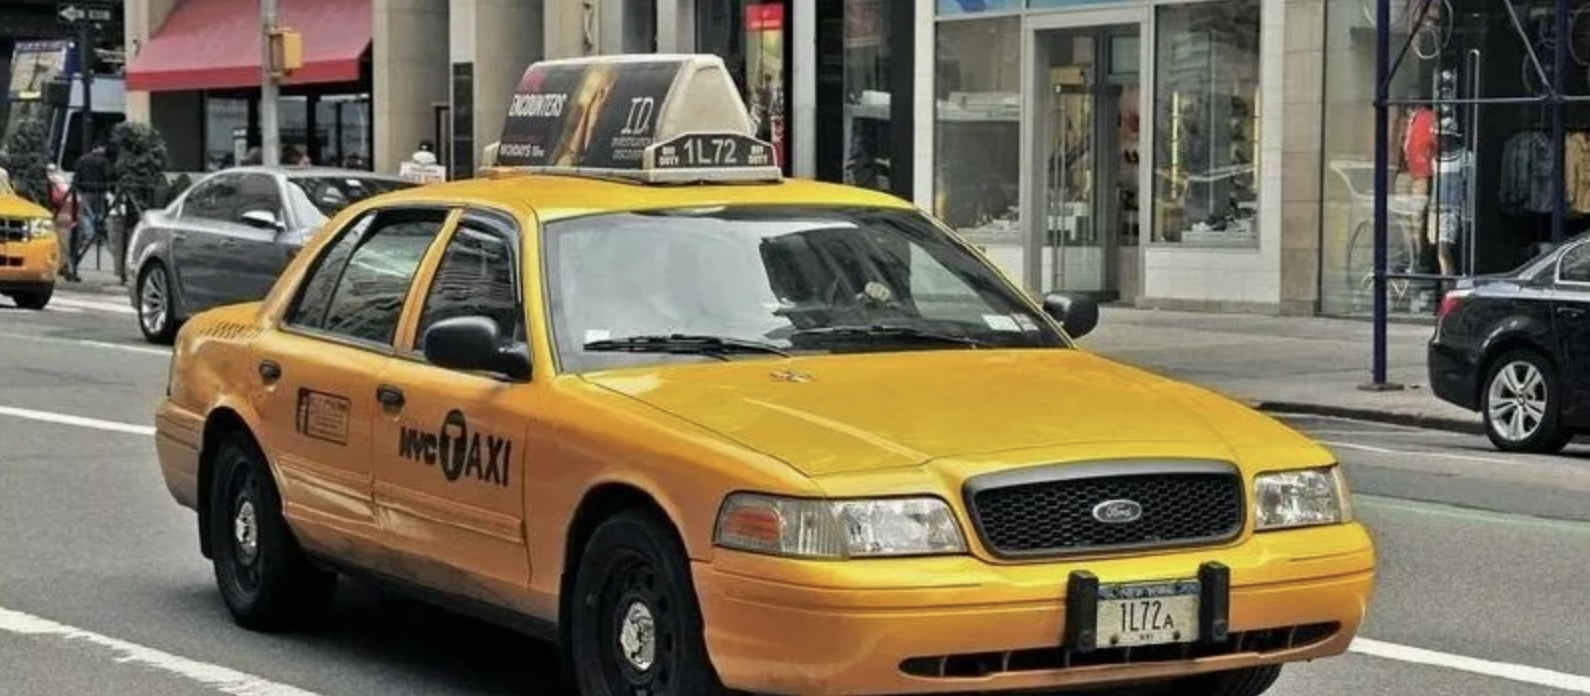 A taxi car | Source: Shutterstock